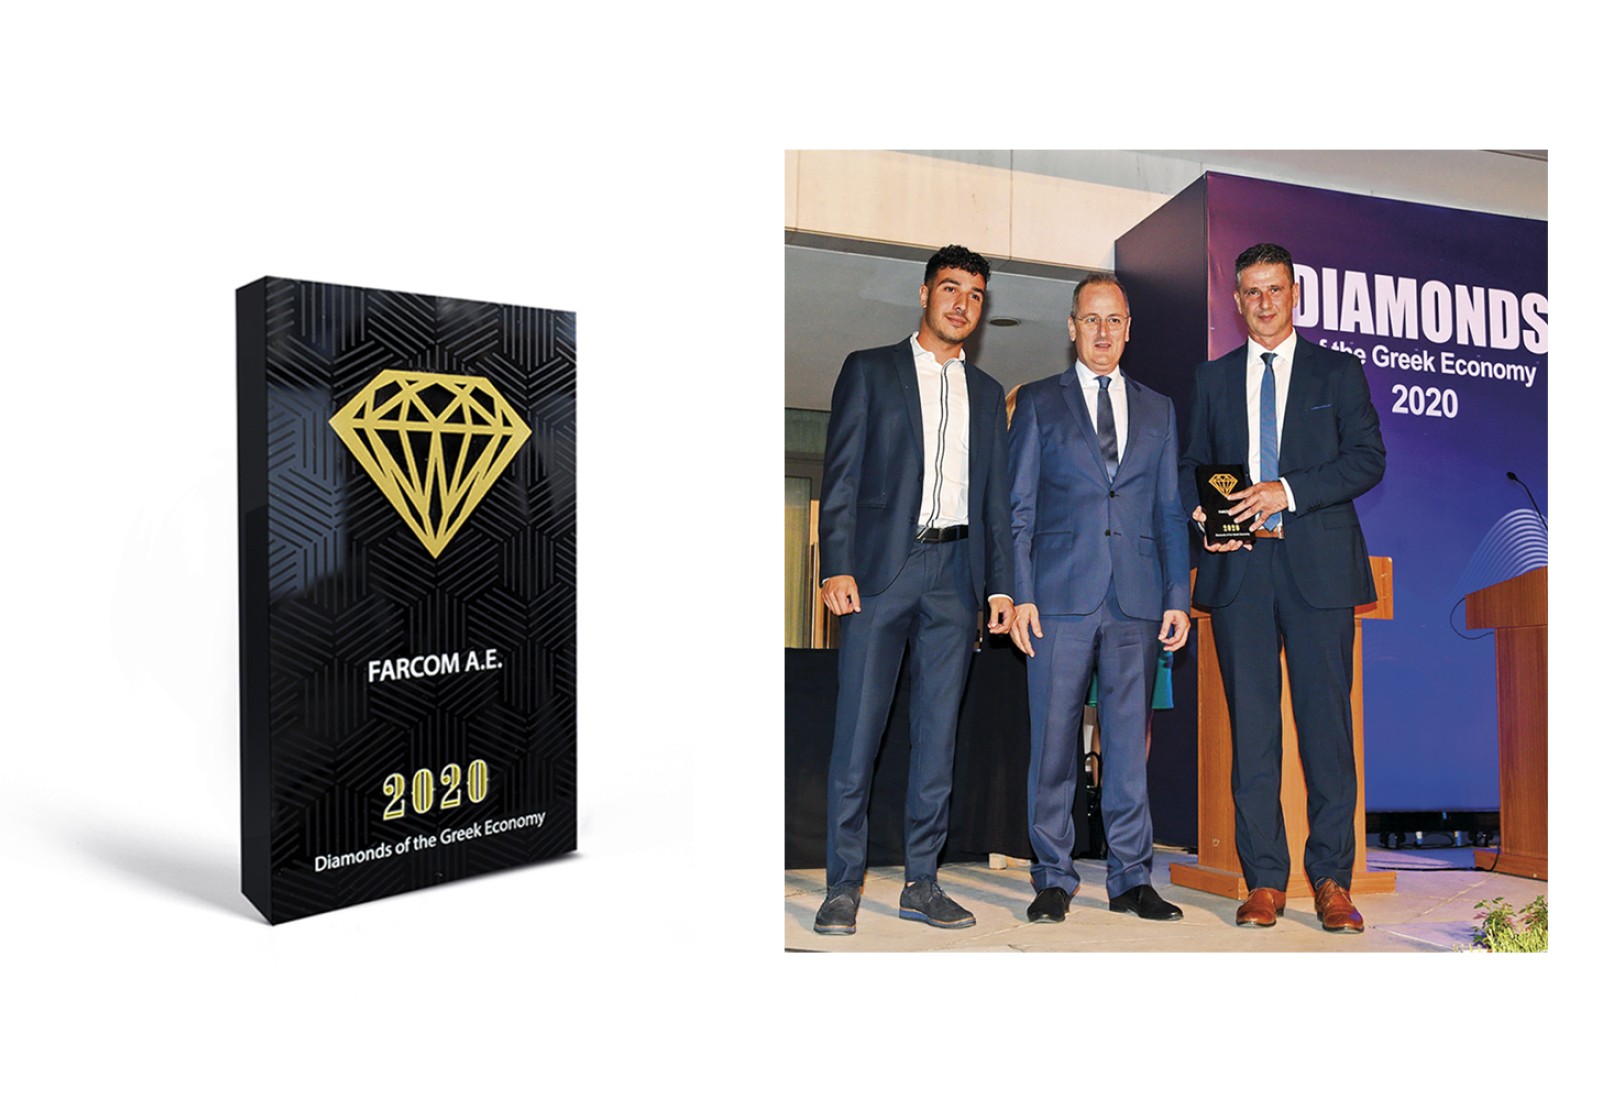 Farcom Another “Diamonds of the Greek Economy 2020” business distinction award